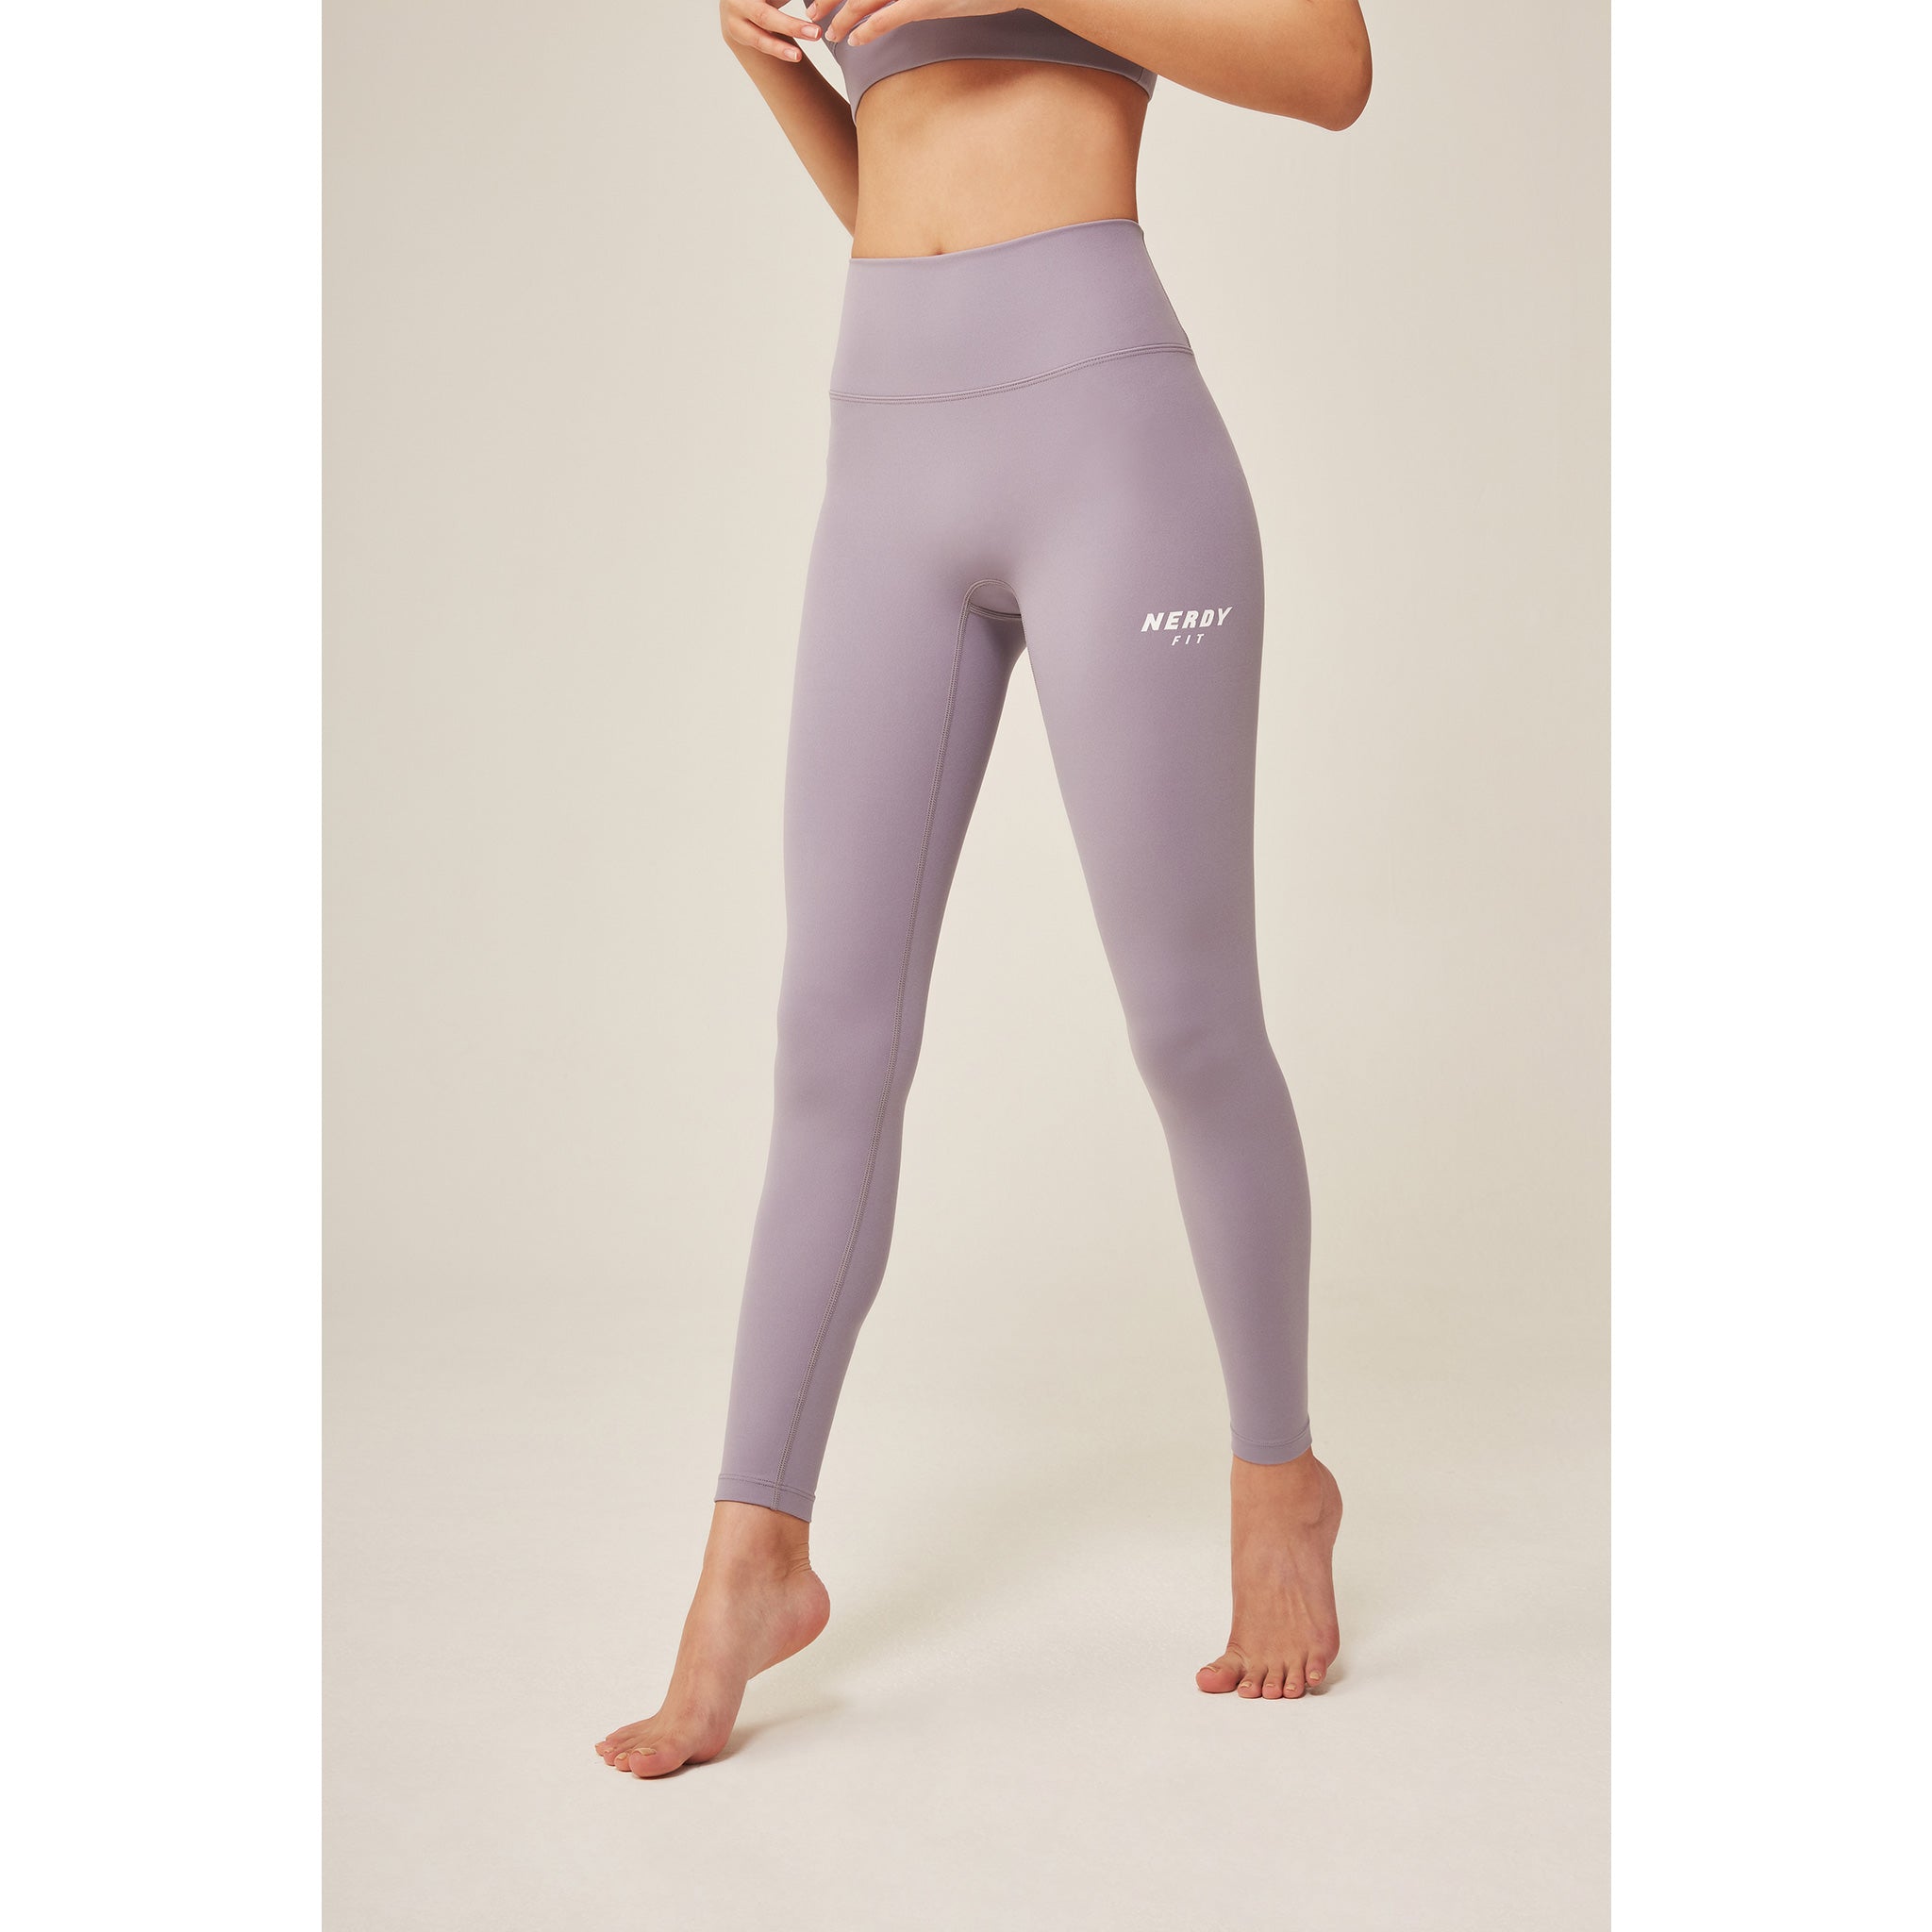 Fitness Cotton Leggings Fit+ - Grey - StoresRadar